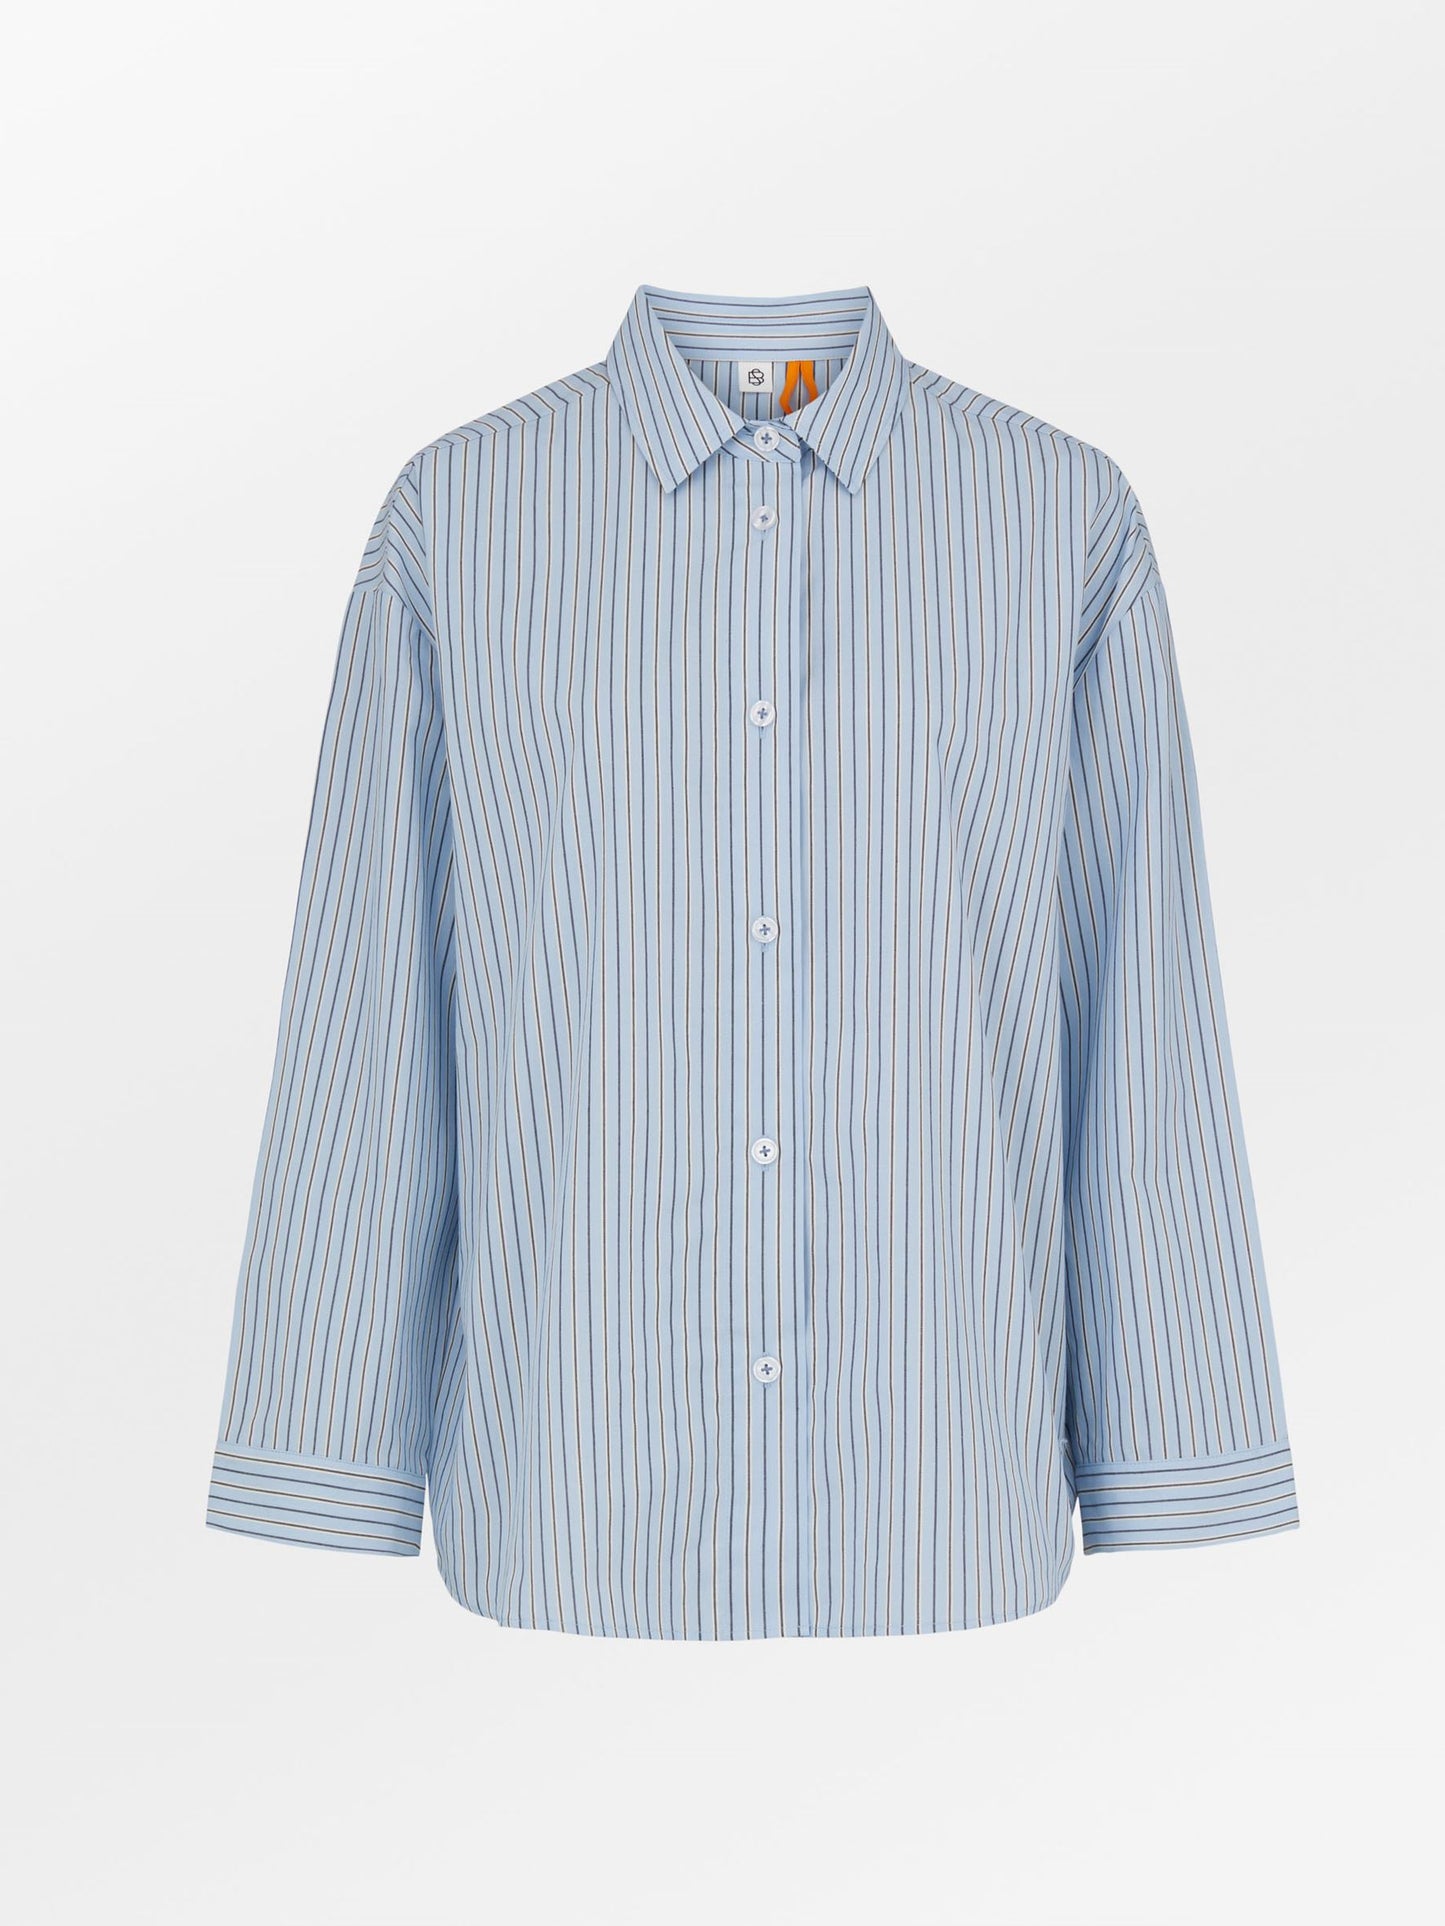 Becksöndergaard, Stripel Pyjamas Set - Clear Blue Sky, homewear, homewear